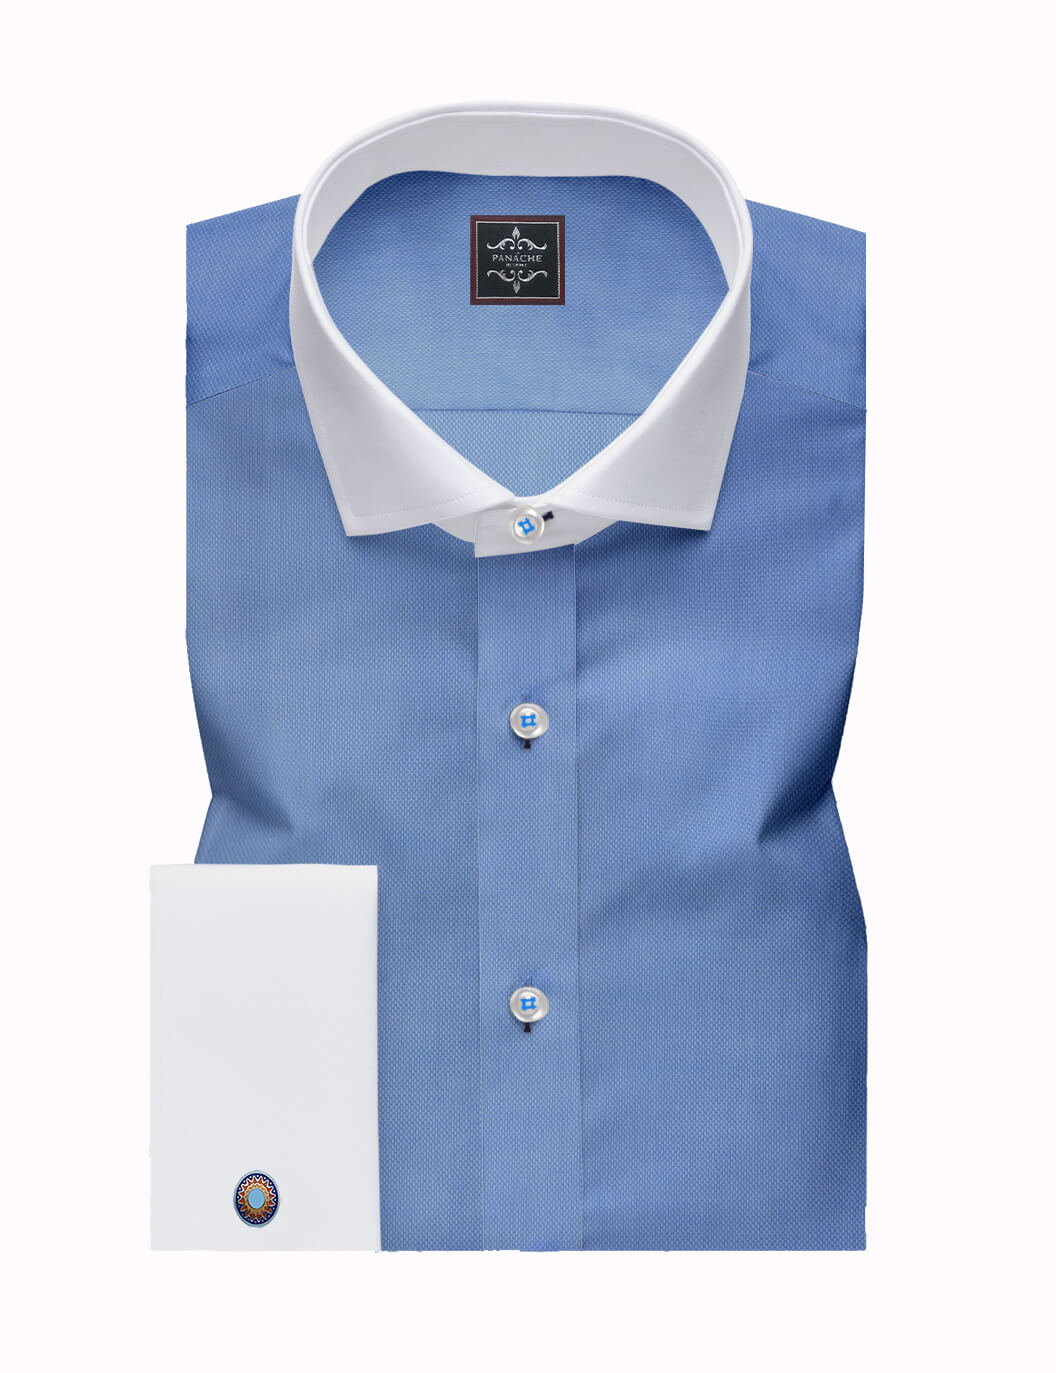 Medium Blue Oxford Shirt